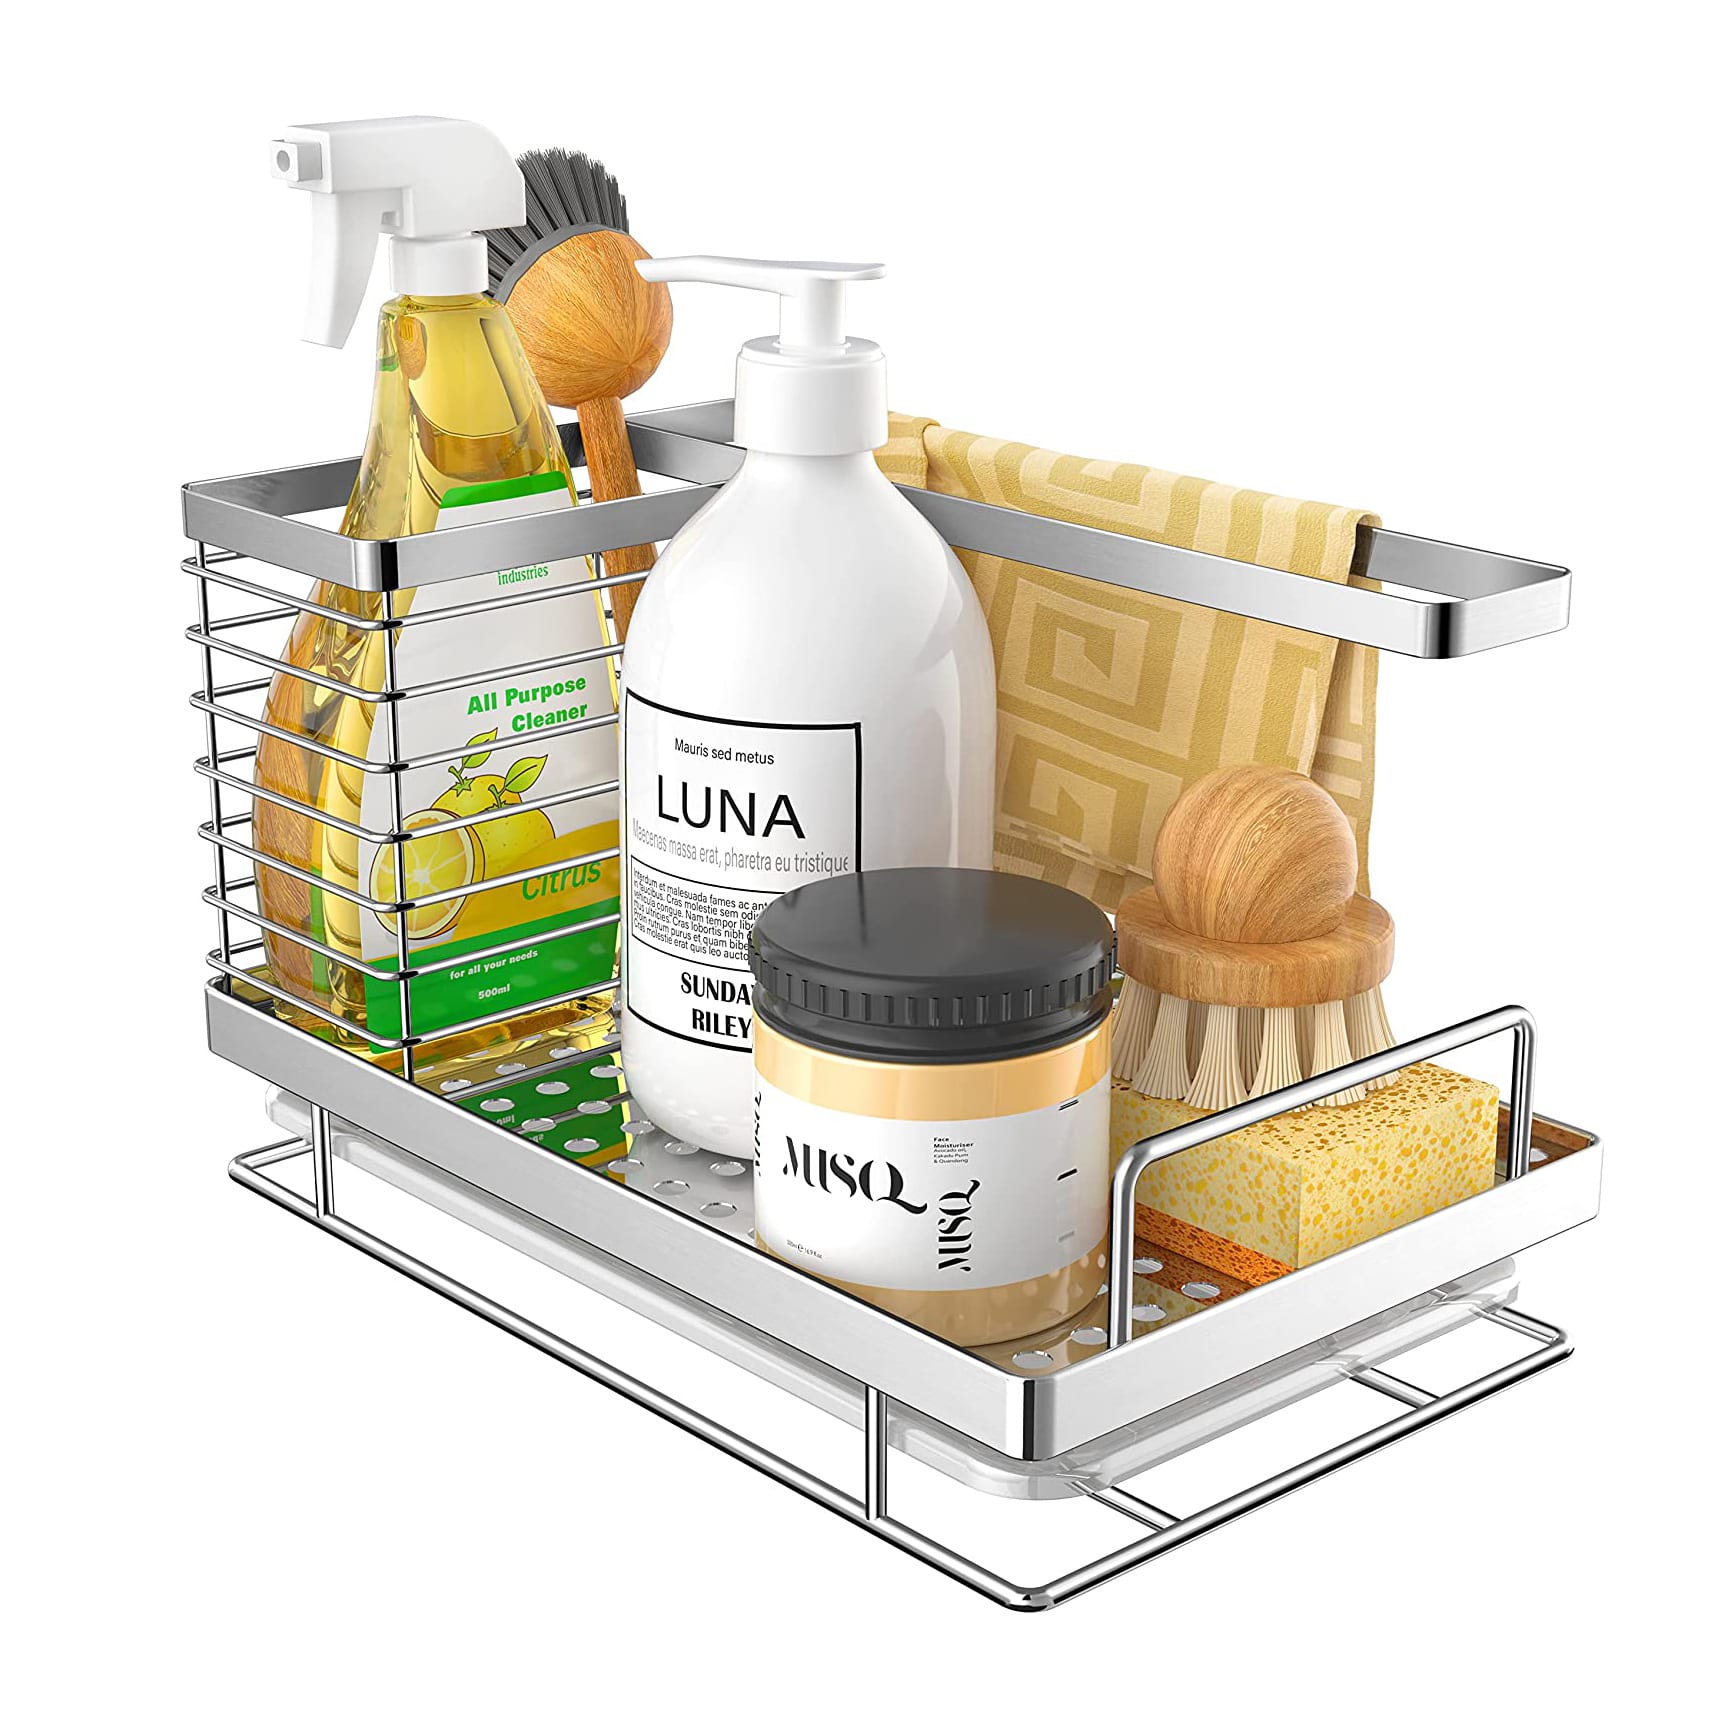 https://cdn.apartmenttherapy.info/image/upload/v1672974536/gen-workflow/product-database/odesign-large-kitchen-sink-caddy-organizer-amazon.jpg